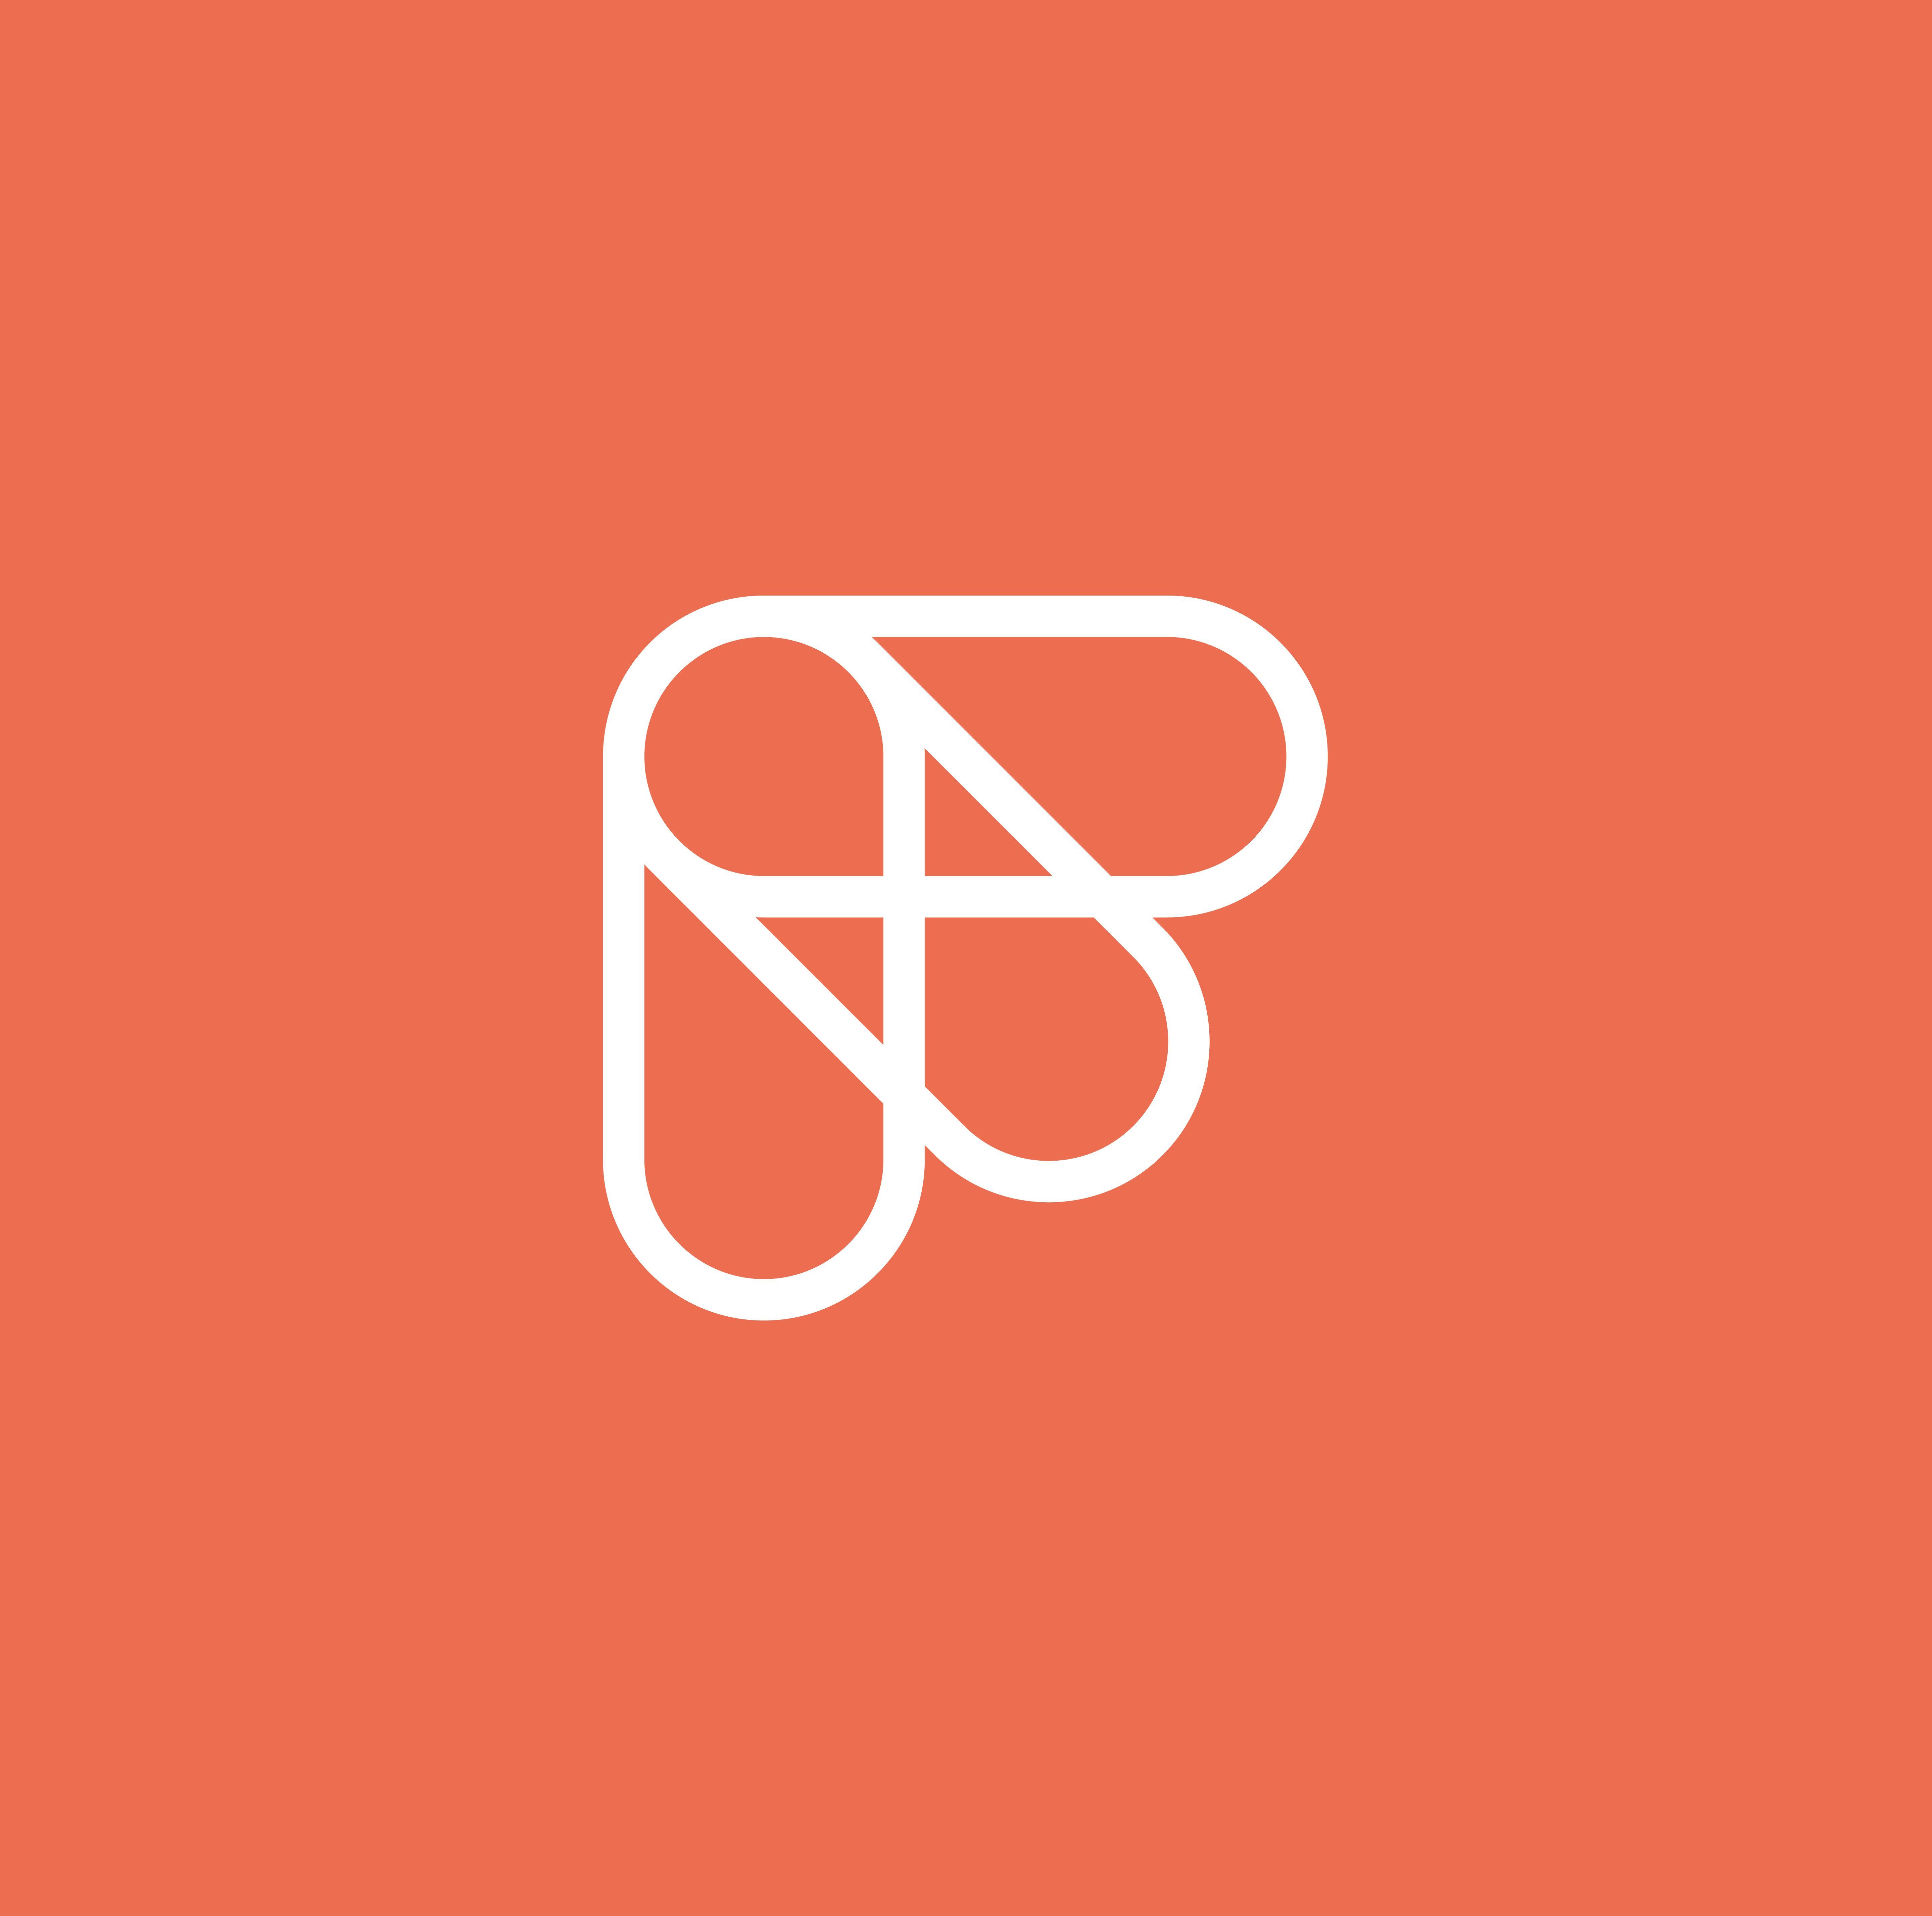 Red and Orange B Logo - Feeld